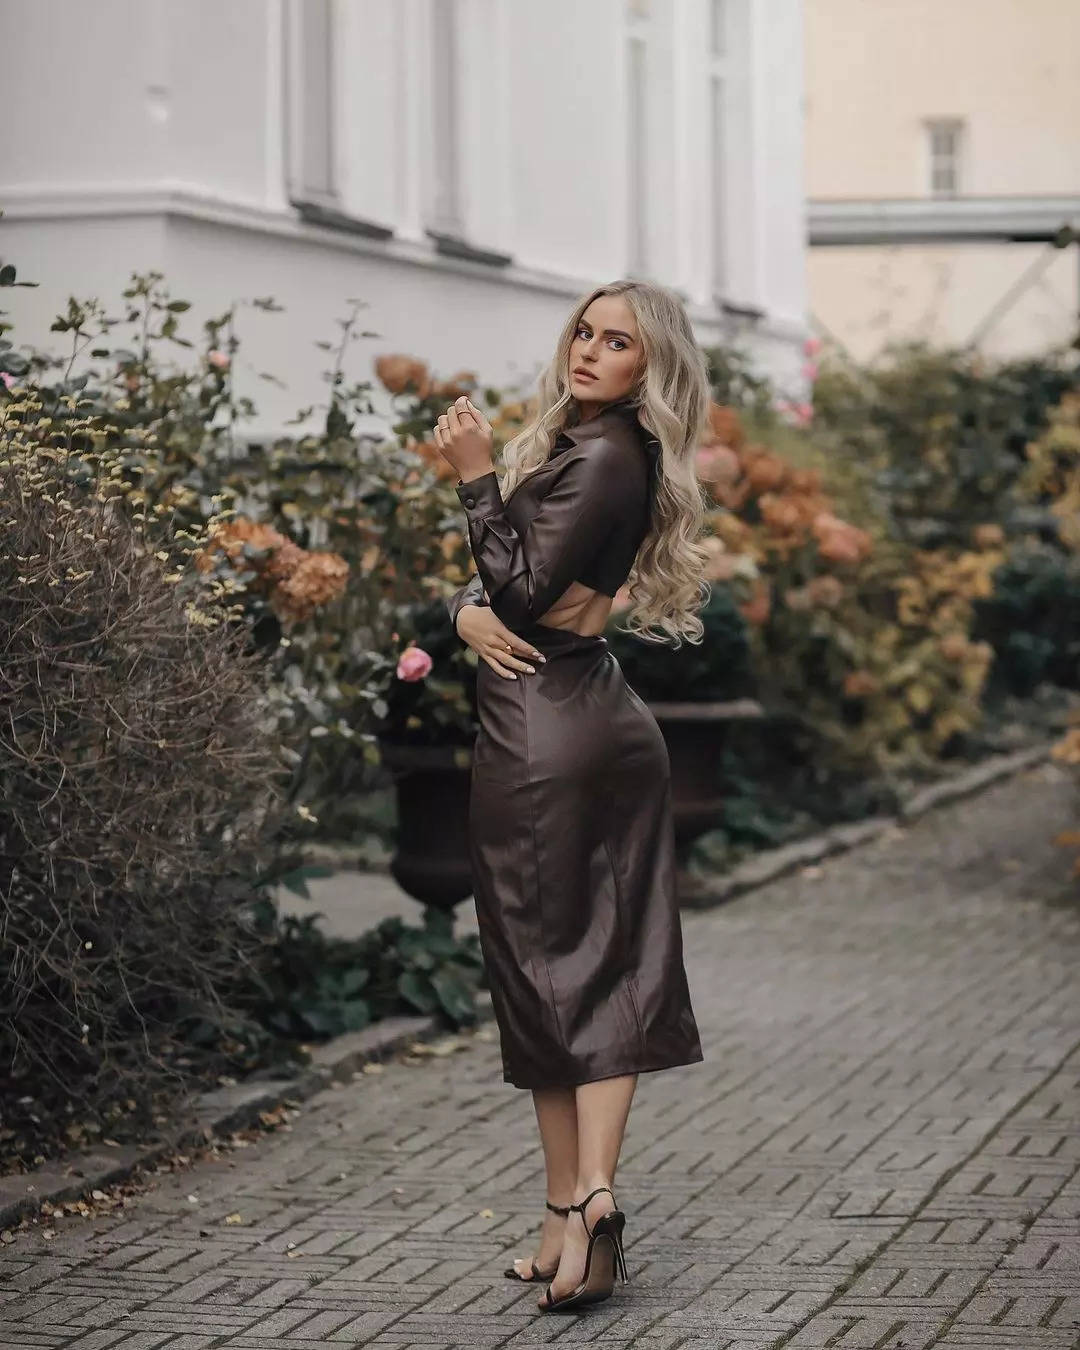 Stylish pictures of social media sensation & fashionista Anna Nyström...